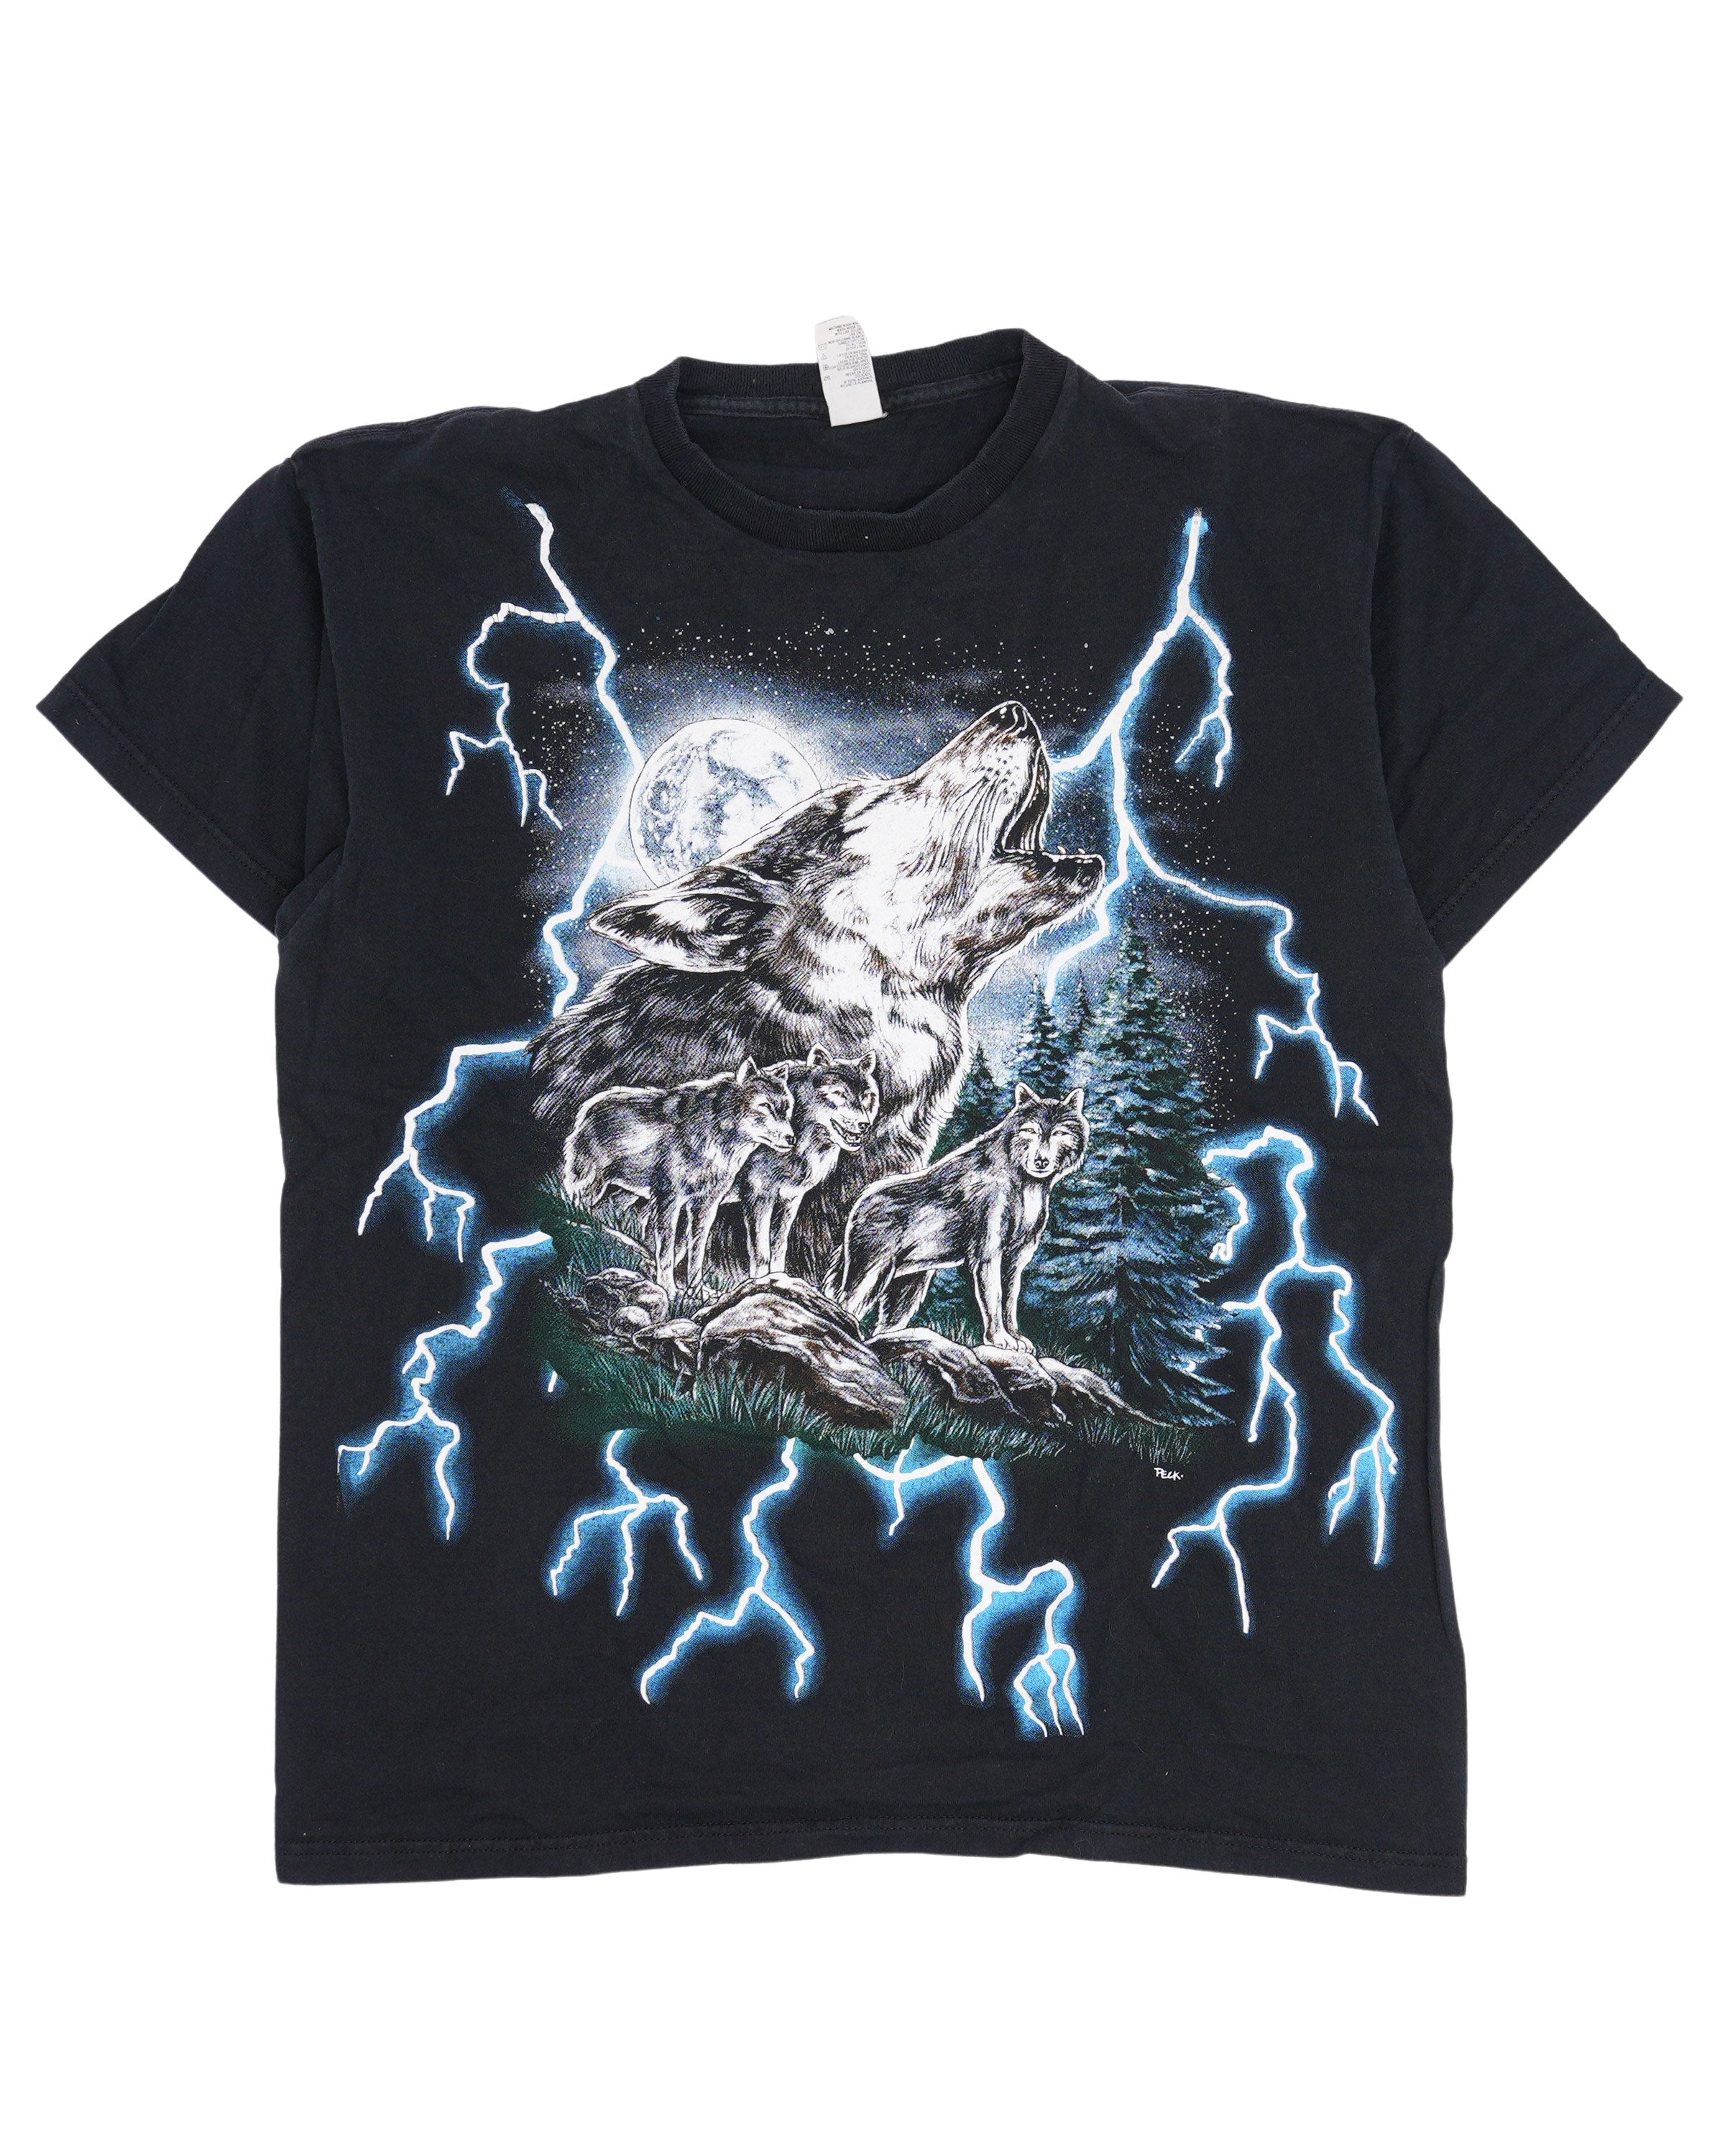 USA Thunder T-Shirt